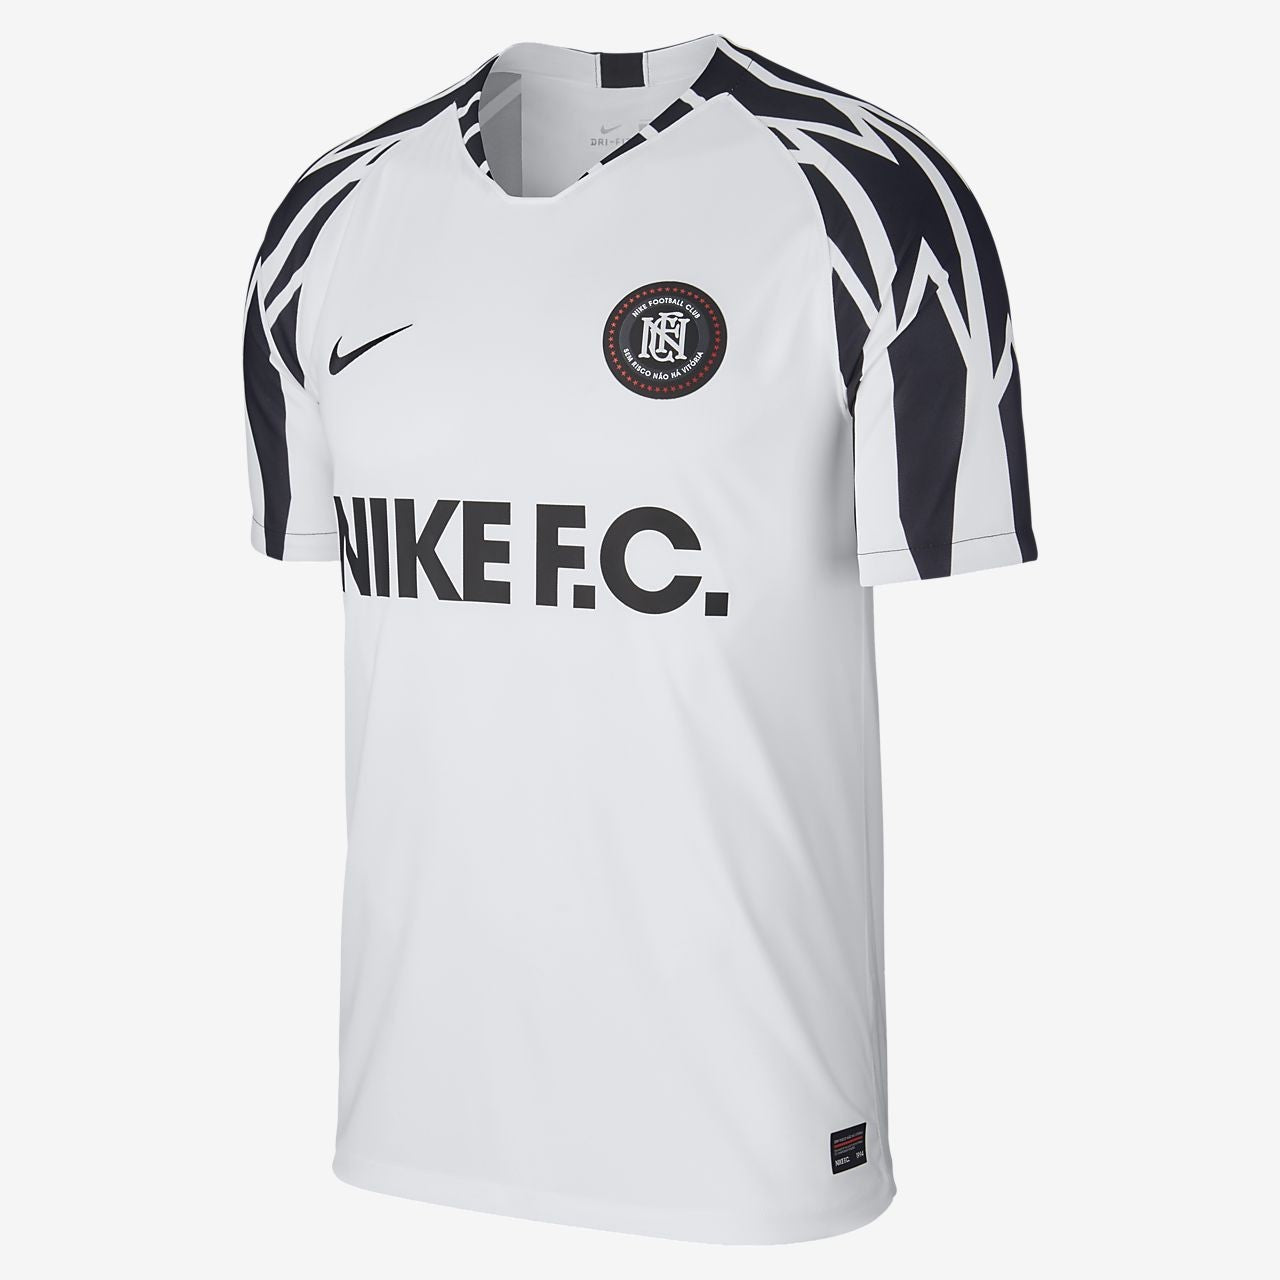 Nike F.C. Home Football Shirt - White - Niky's Sports